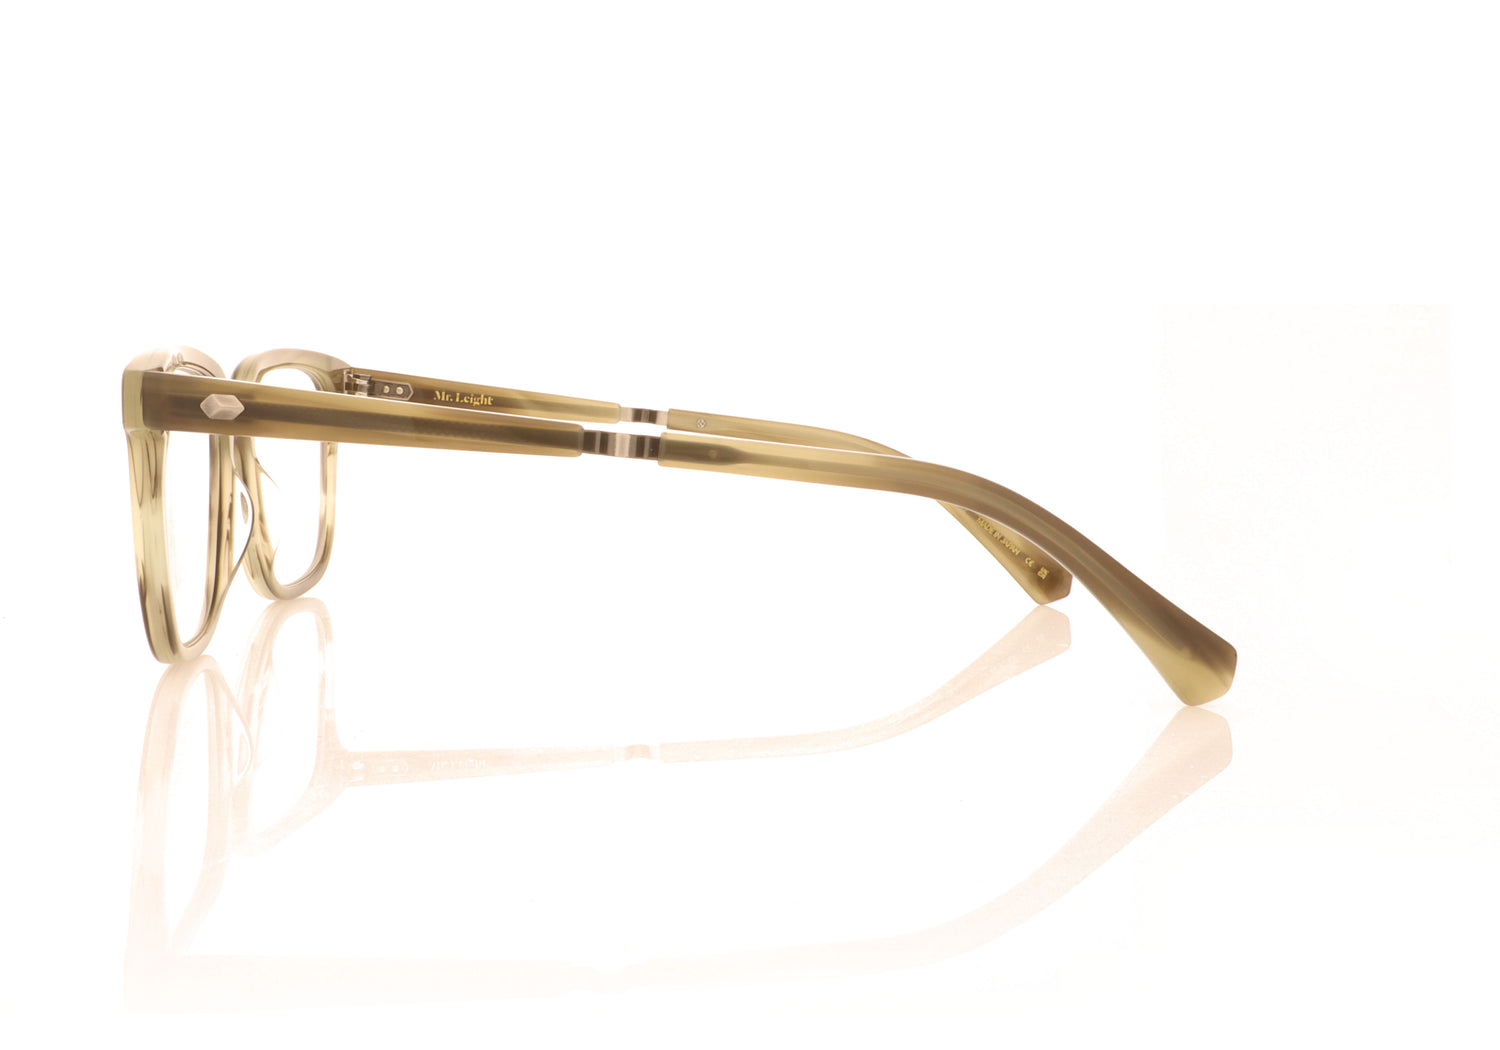 Mr. Leight Lautner C SYM Sycamore Glasses - Side